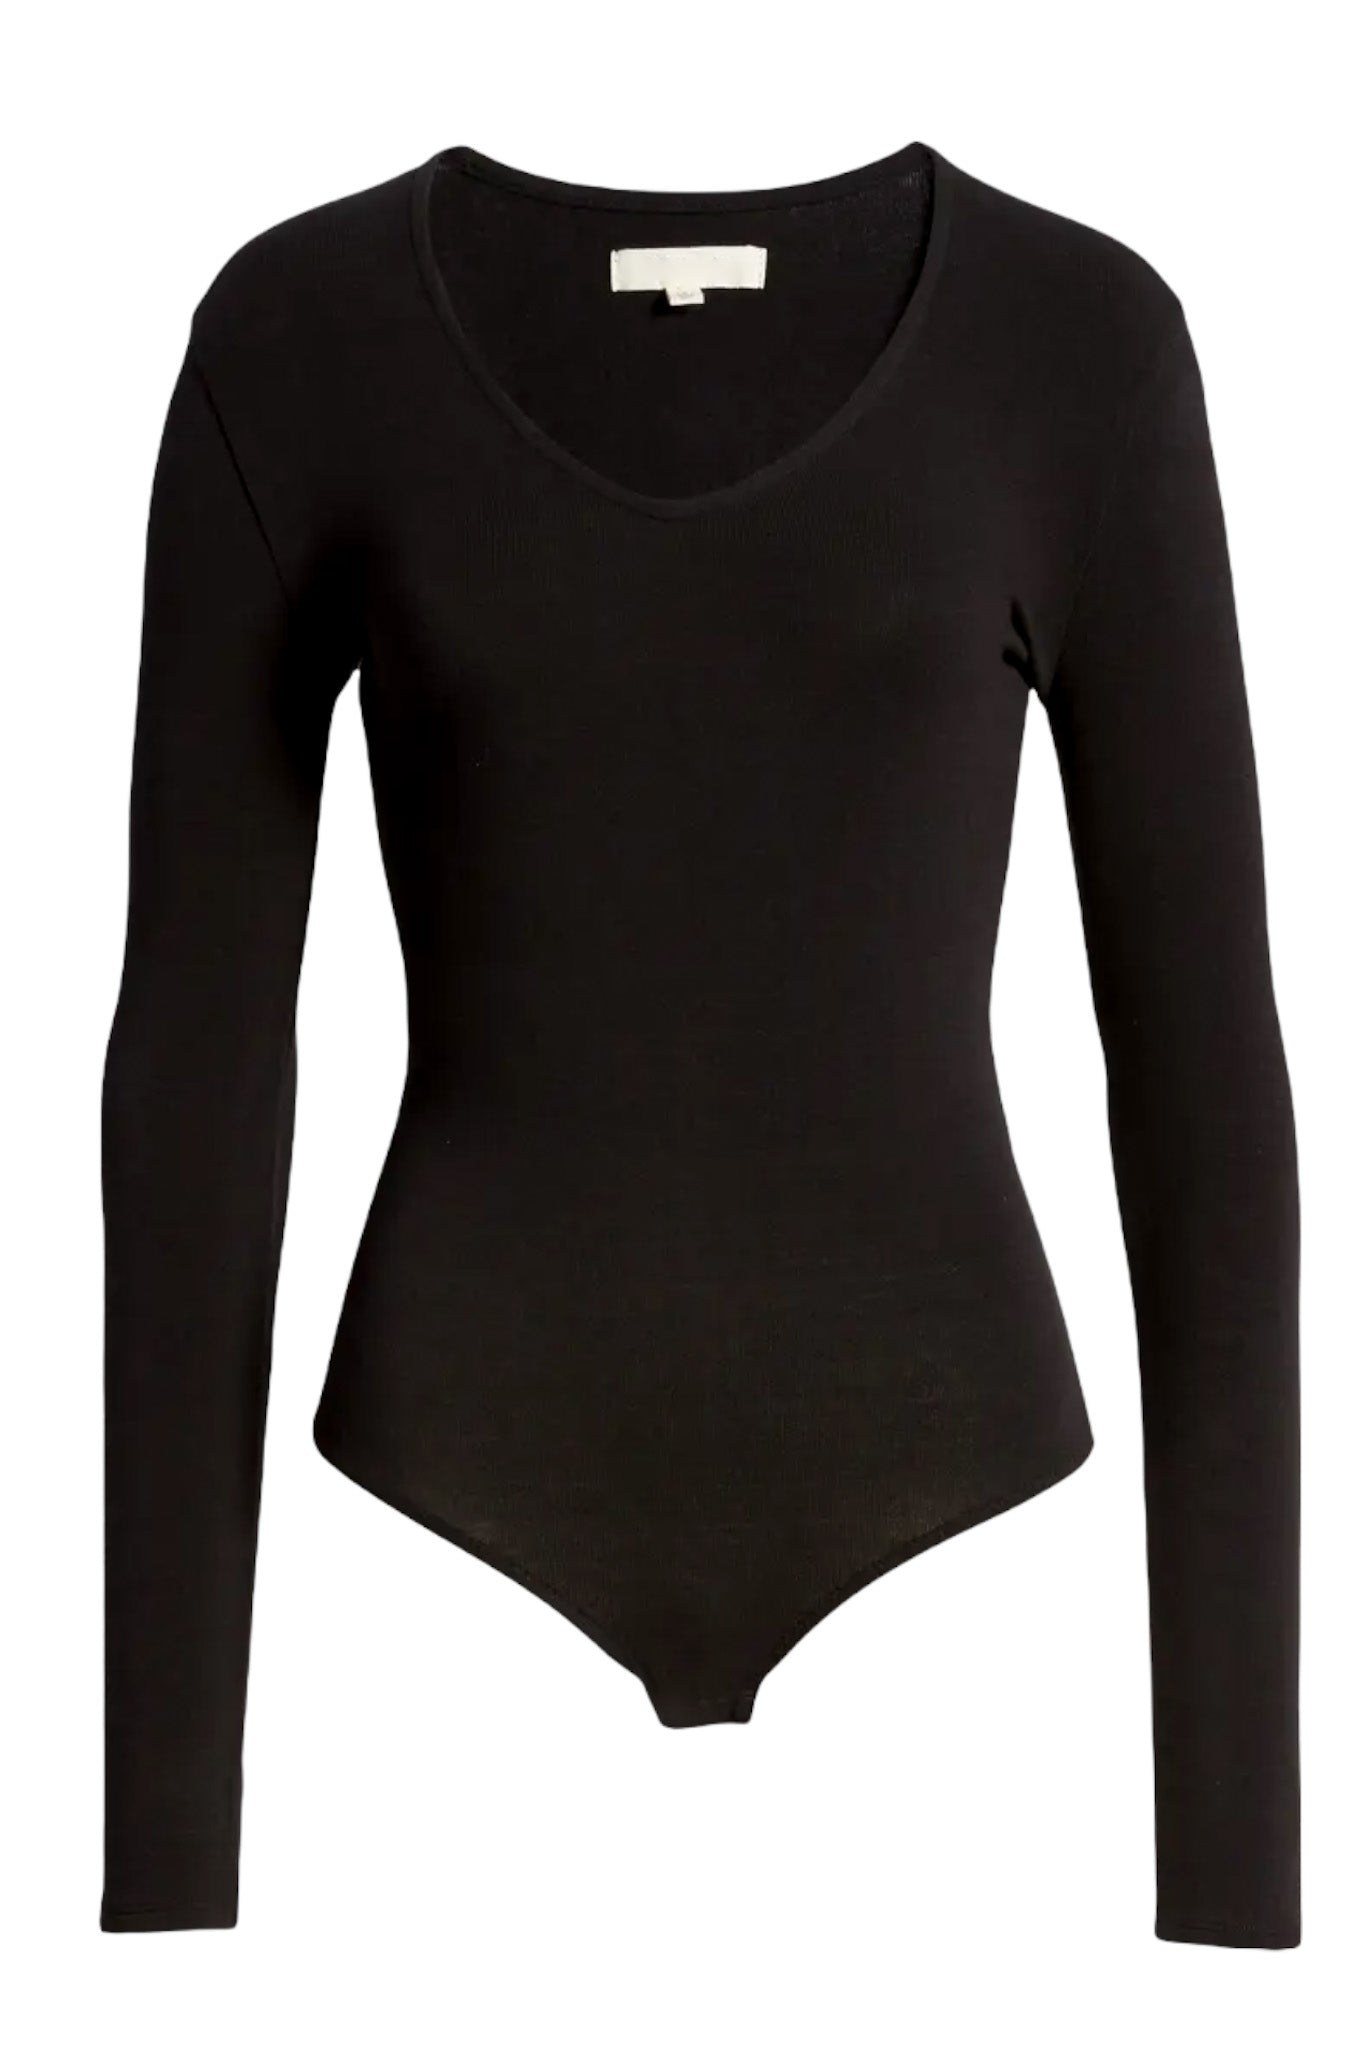 Glow Fashion Boutique black long sleeve bodysuit